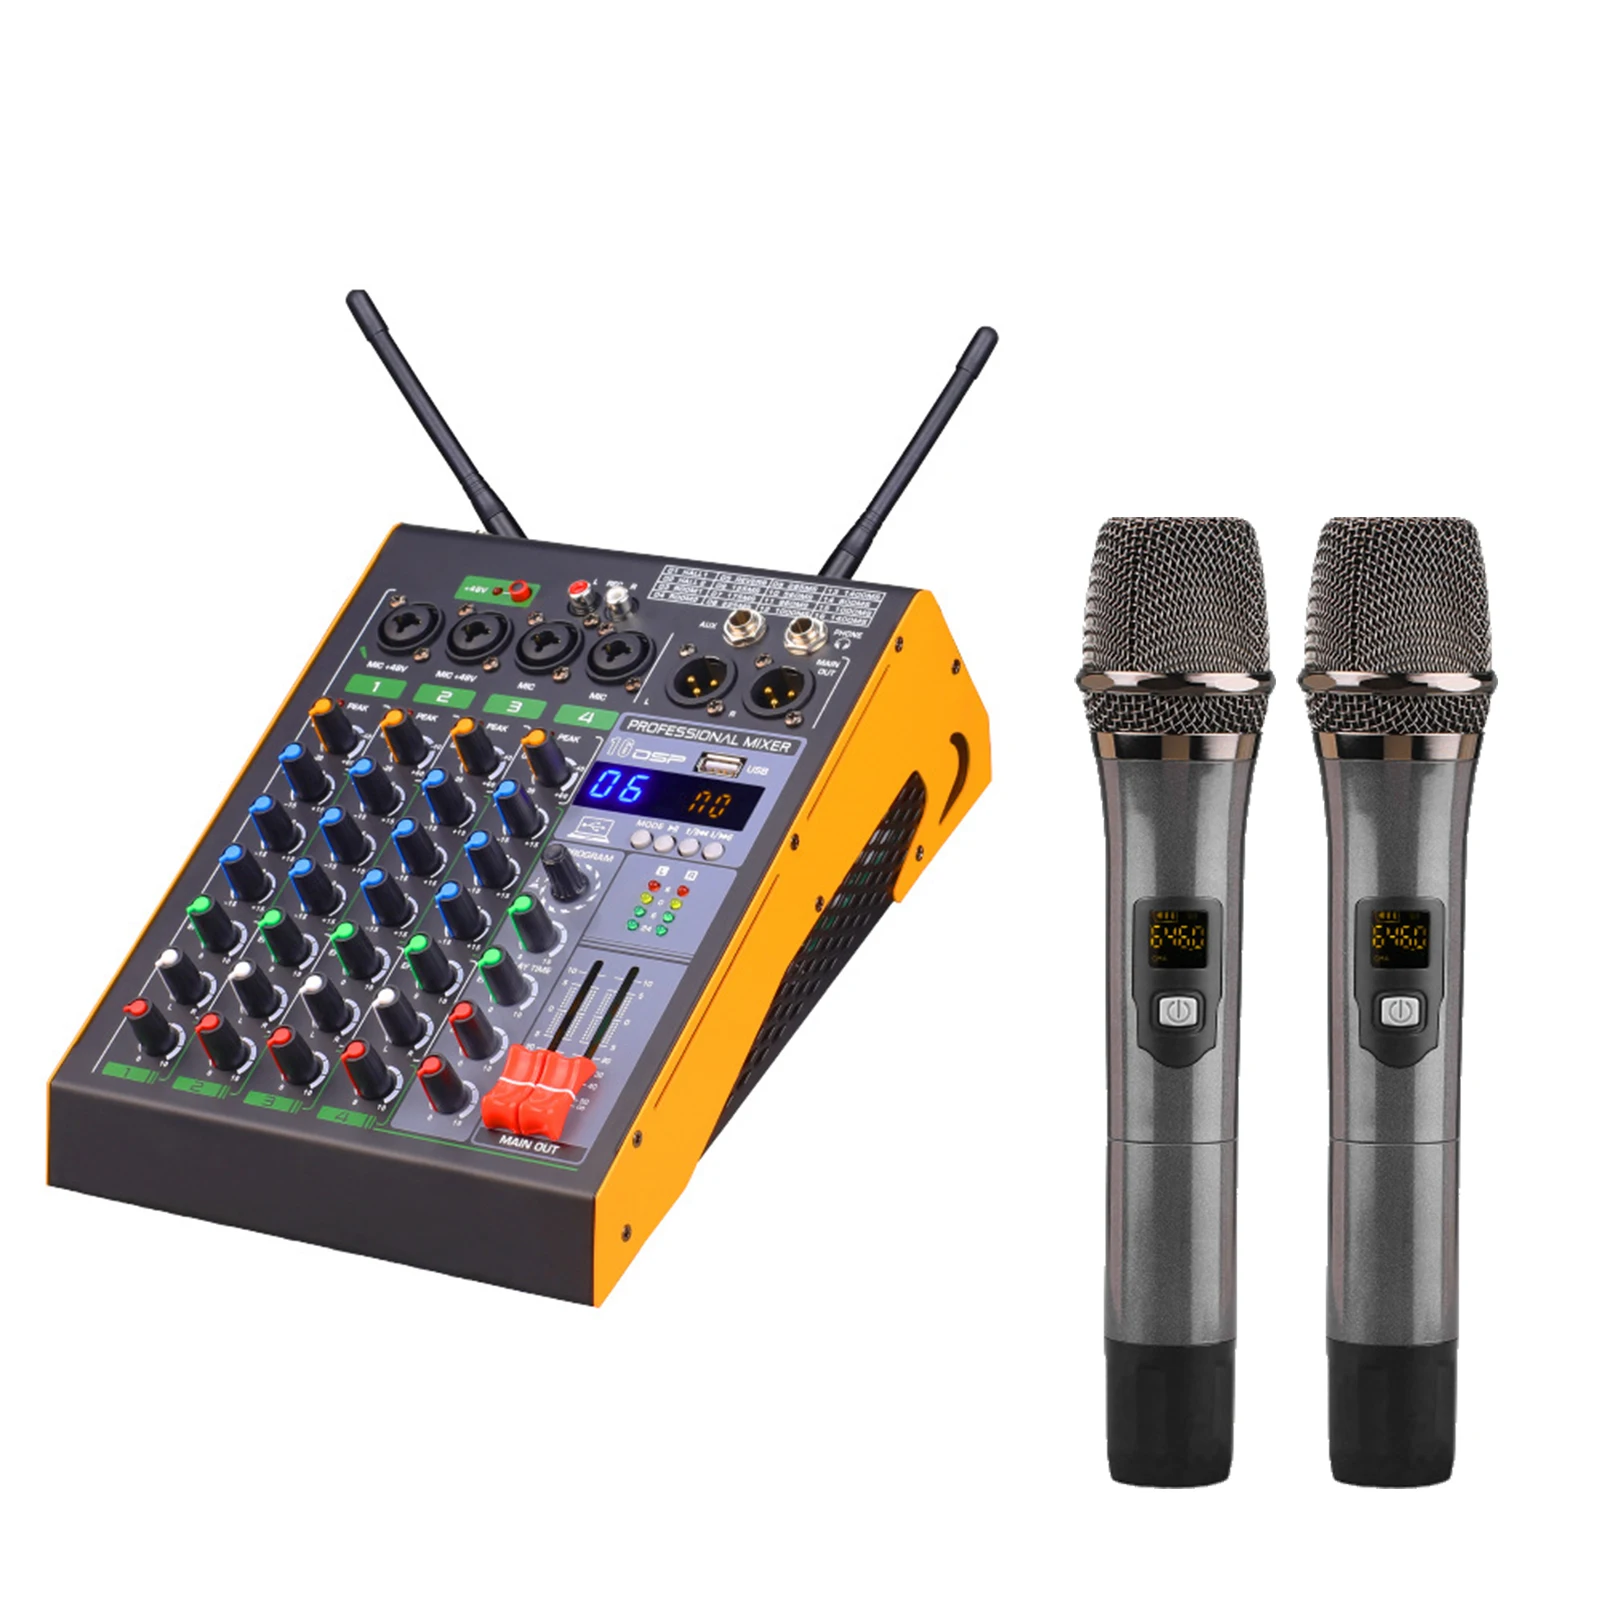 

4-channel Mini Audio Mixer Comes With 2 Wireless Mics Stereo Mixer Console BT USB For DJ Karaoke PC Record Audio Mixer